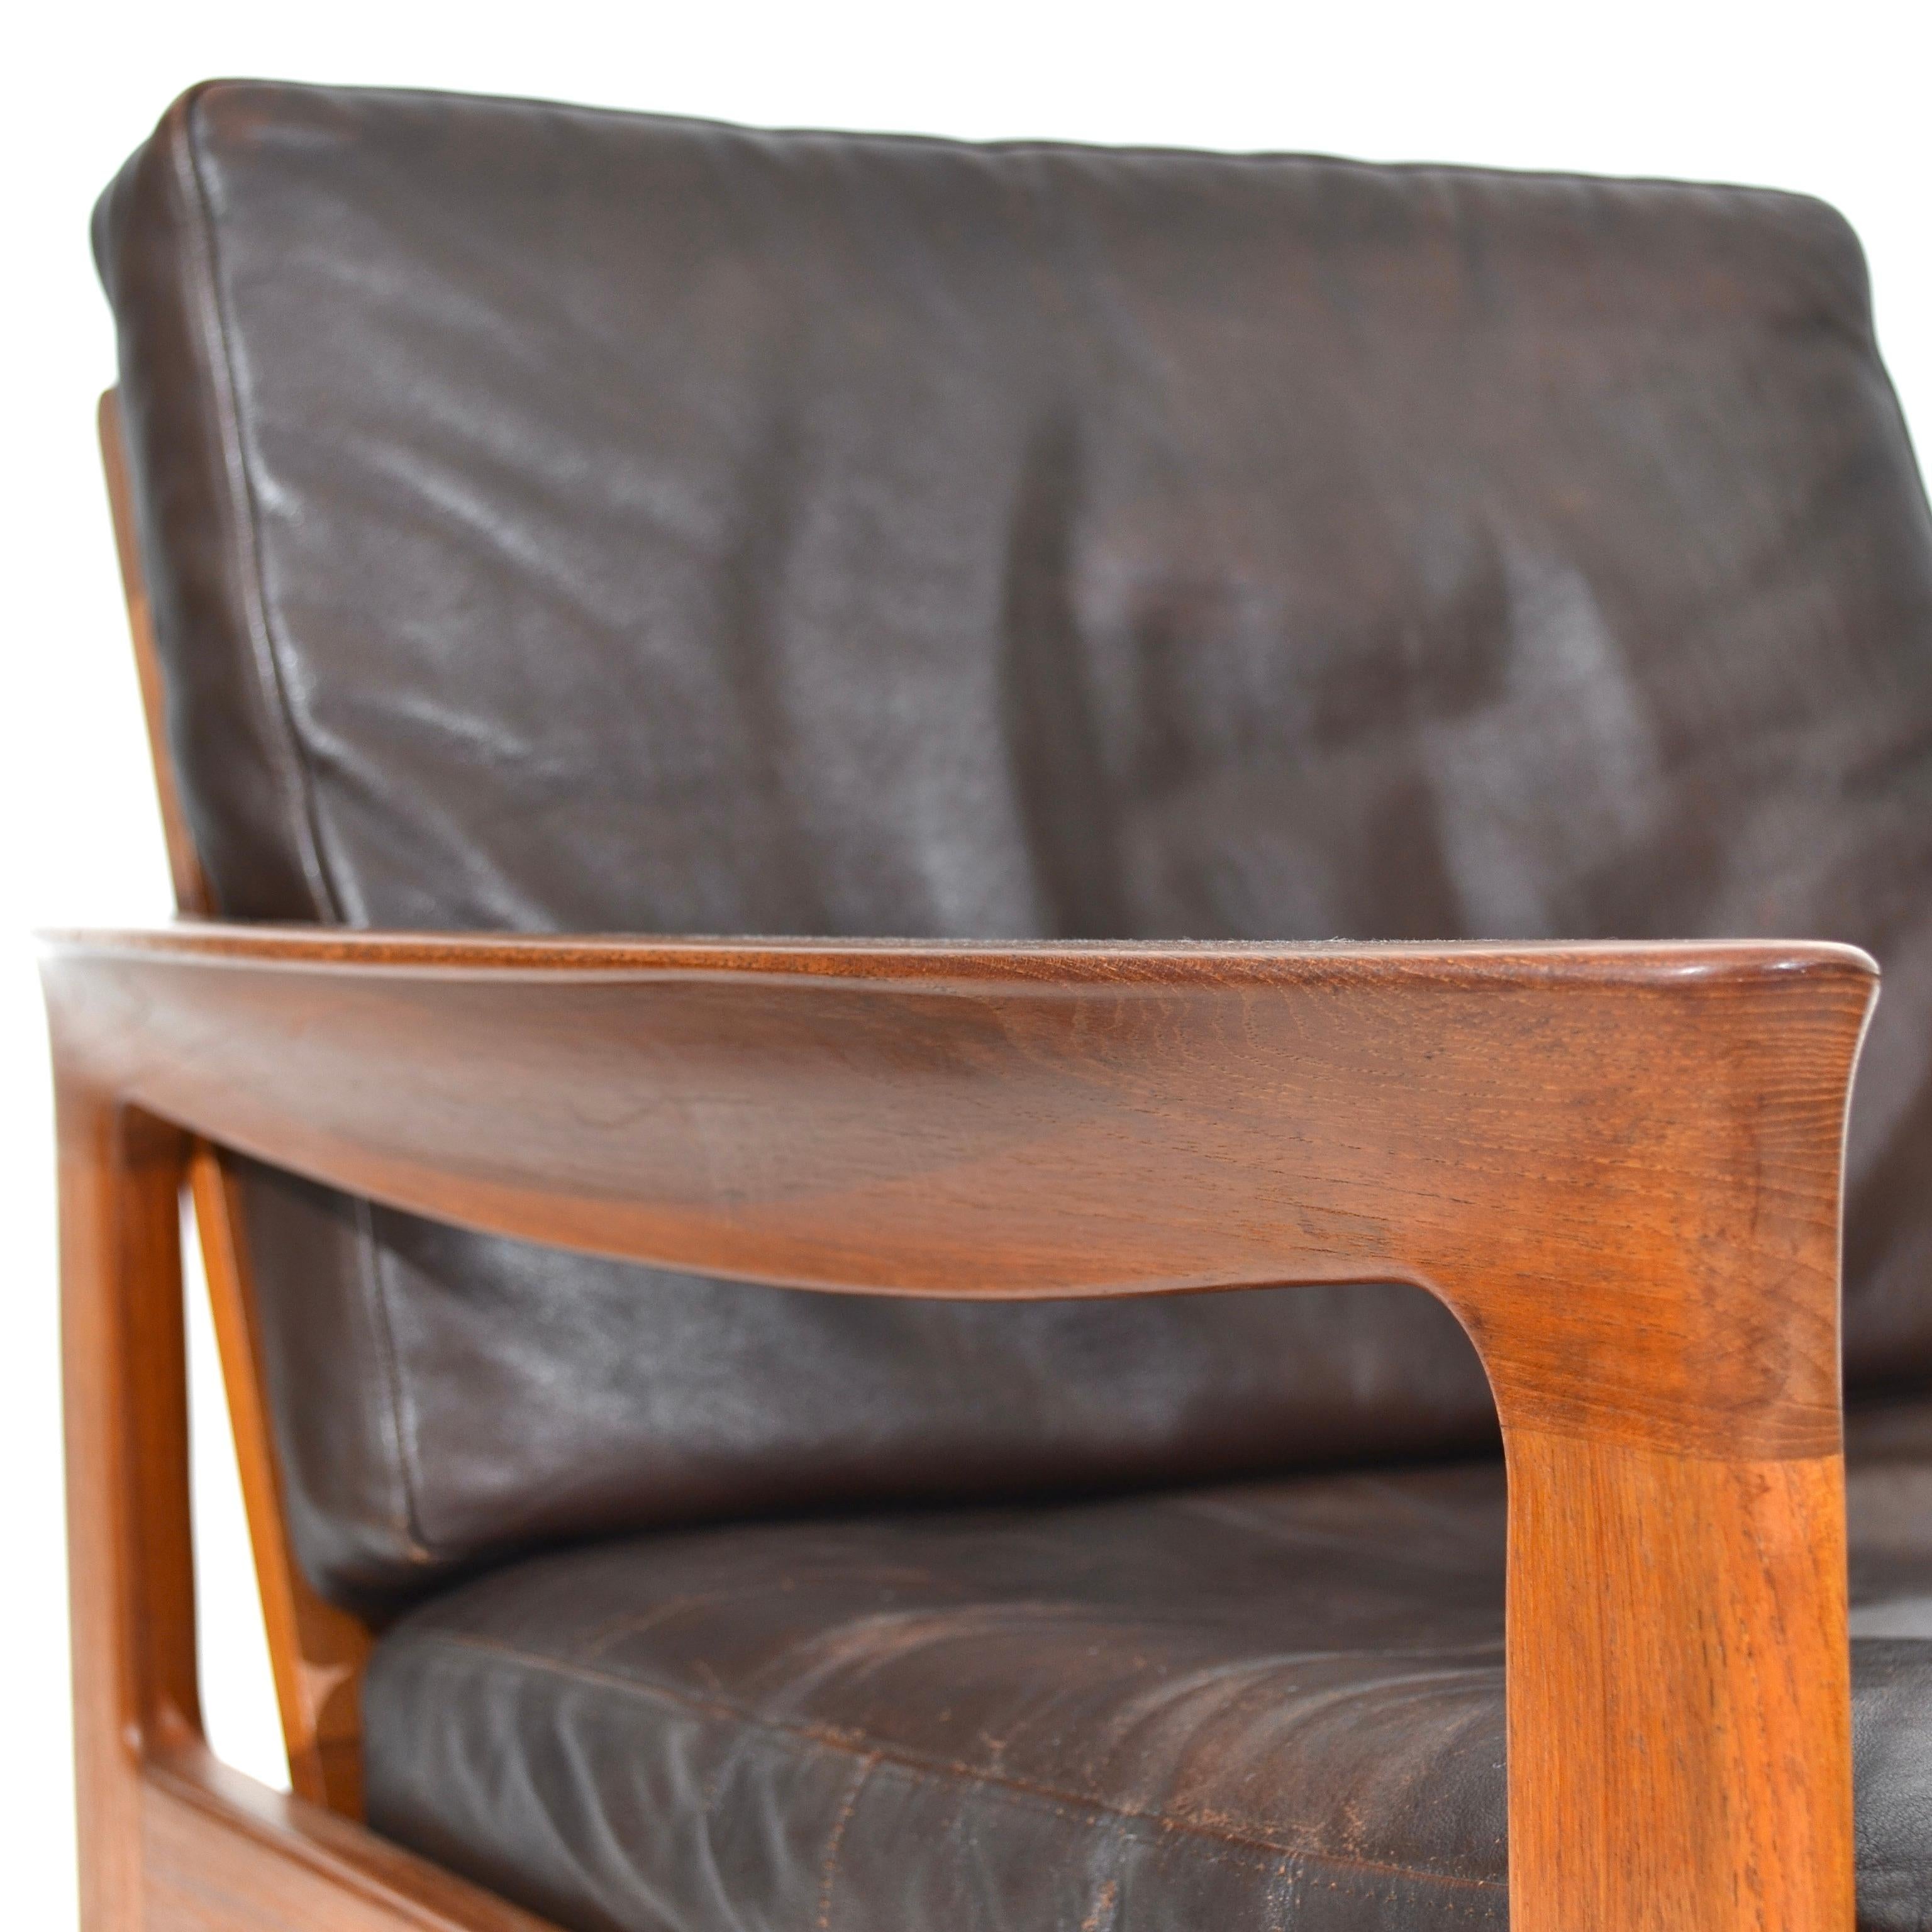 Leather and teak armchair, Arne Wahl Iversen, Komfort, Denmark, 1960's For Sale 1